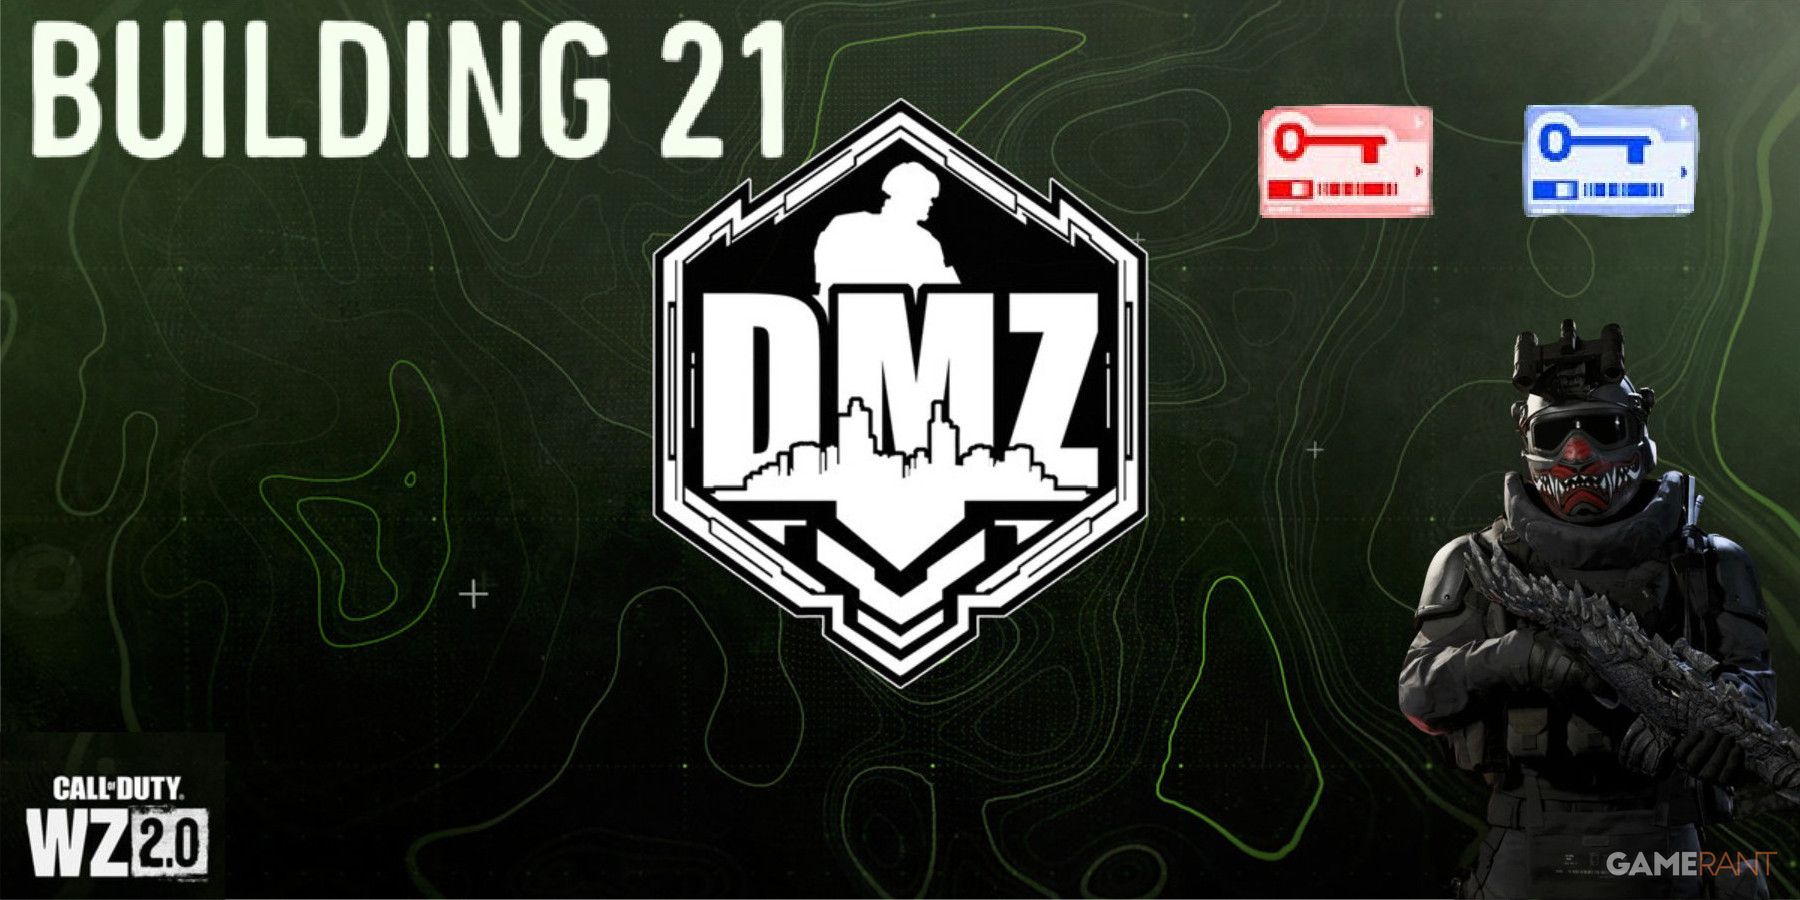 Call of Duty DMZ Building 21